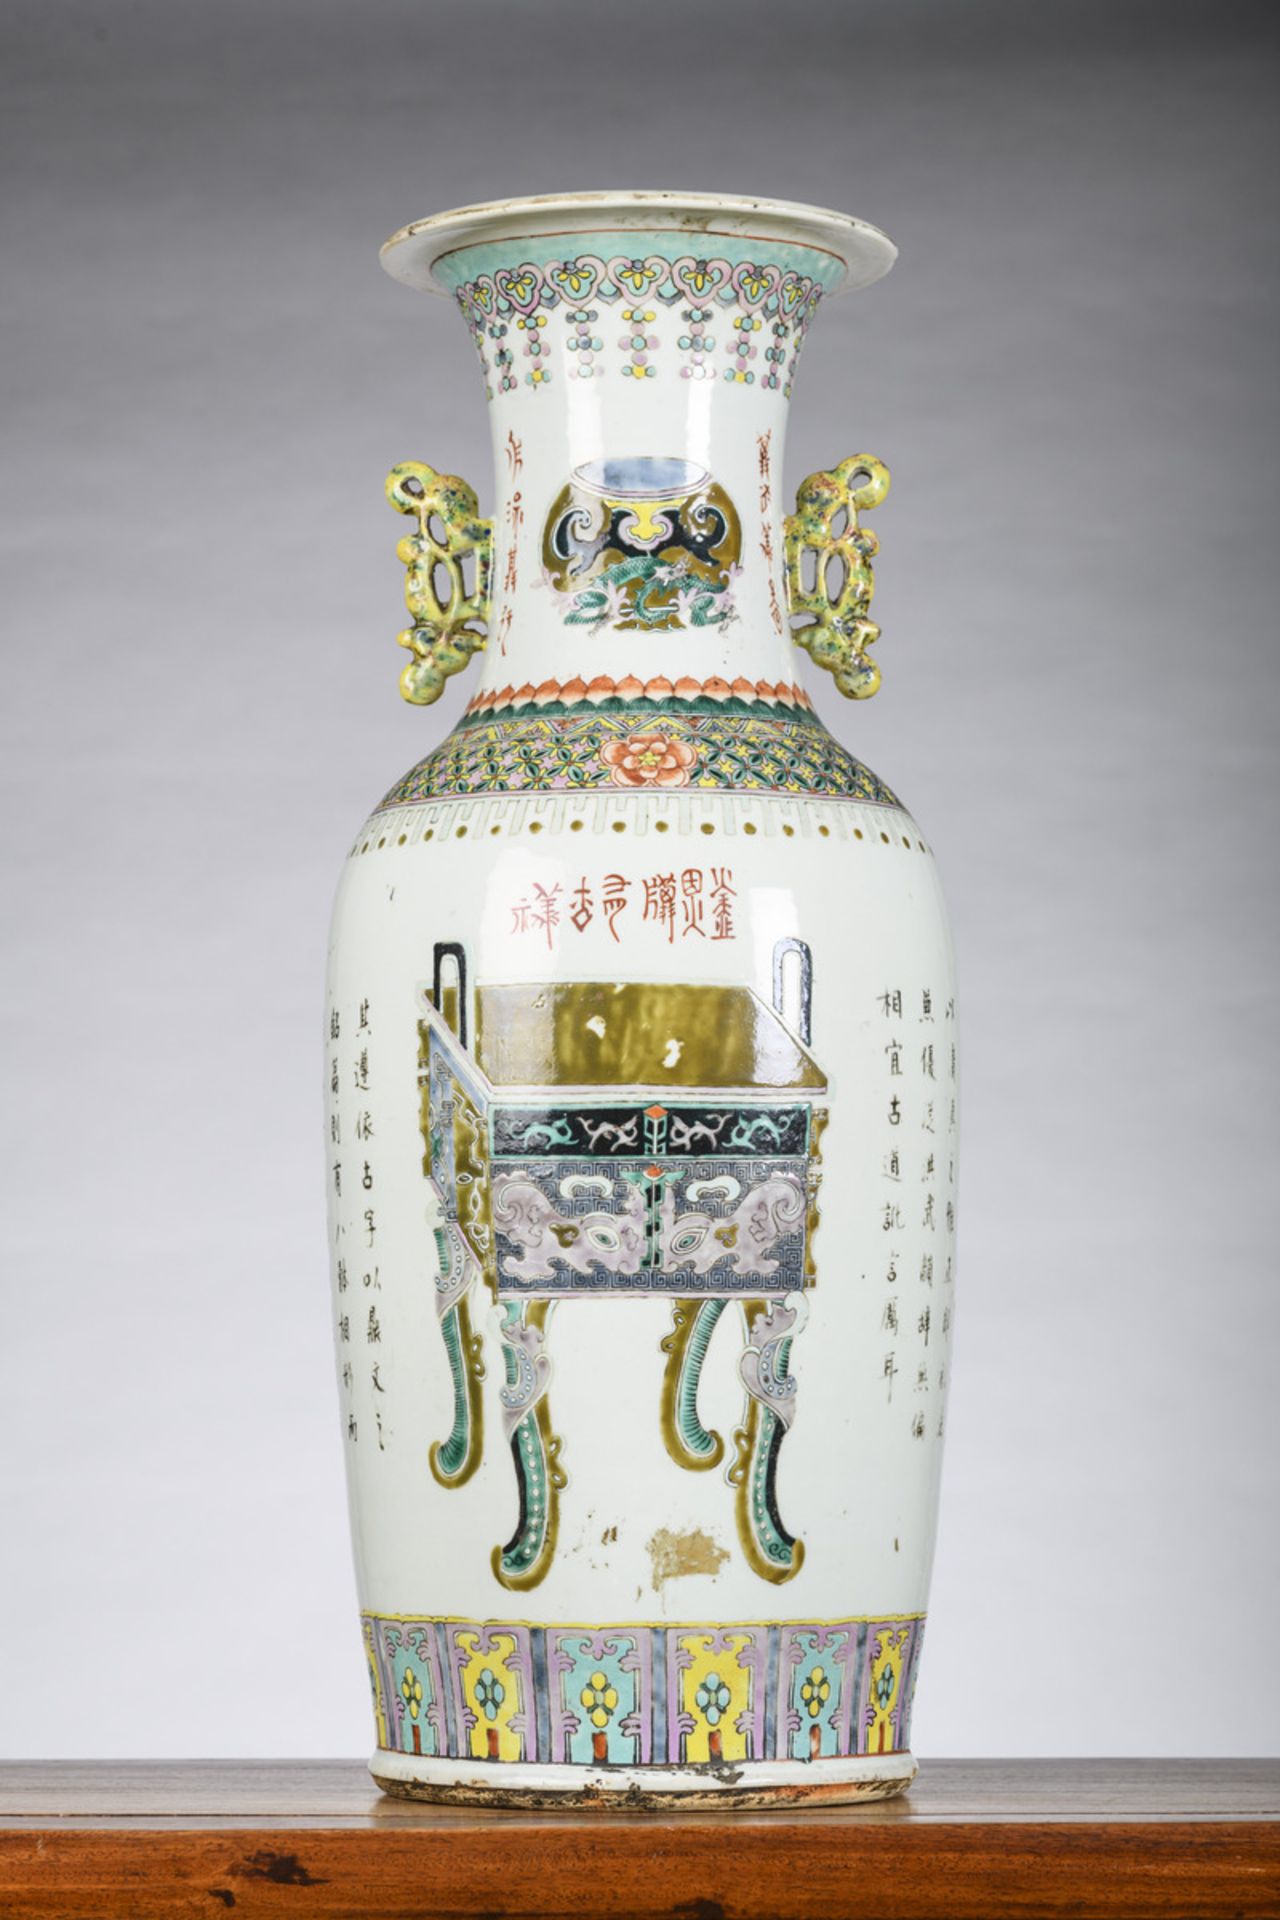 Chinese porcelain vase 'Antiquities' (h60.5cm) (*)